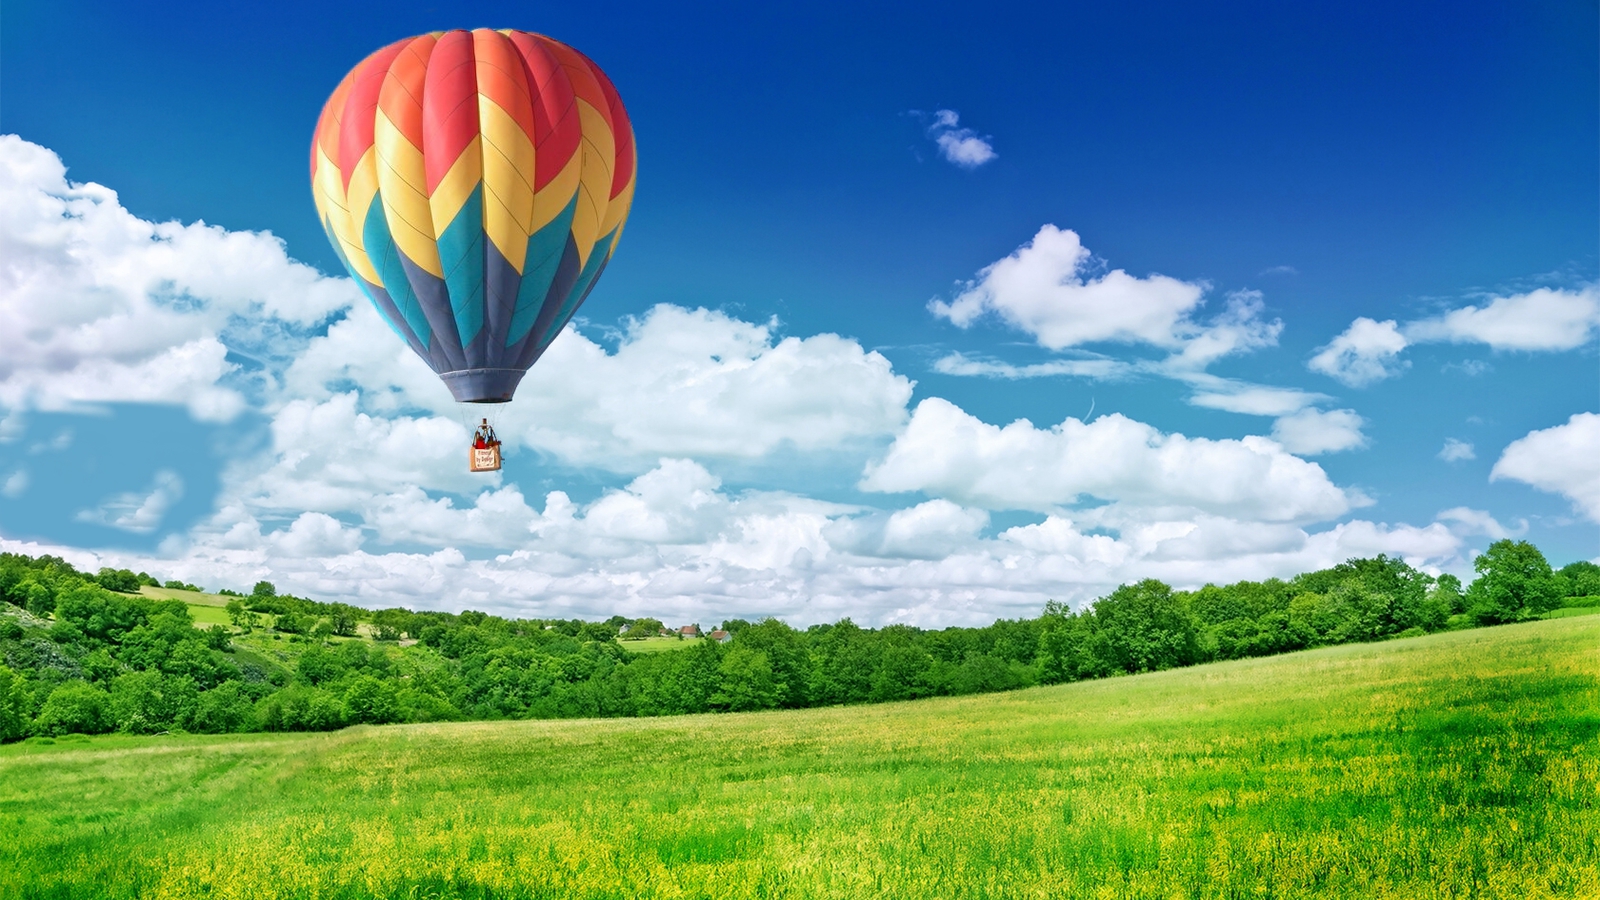 free wallpaper backgrounds,hot air balloon,hot air ballooning,sky,nature,cloud